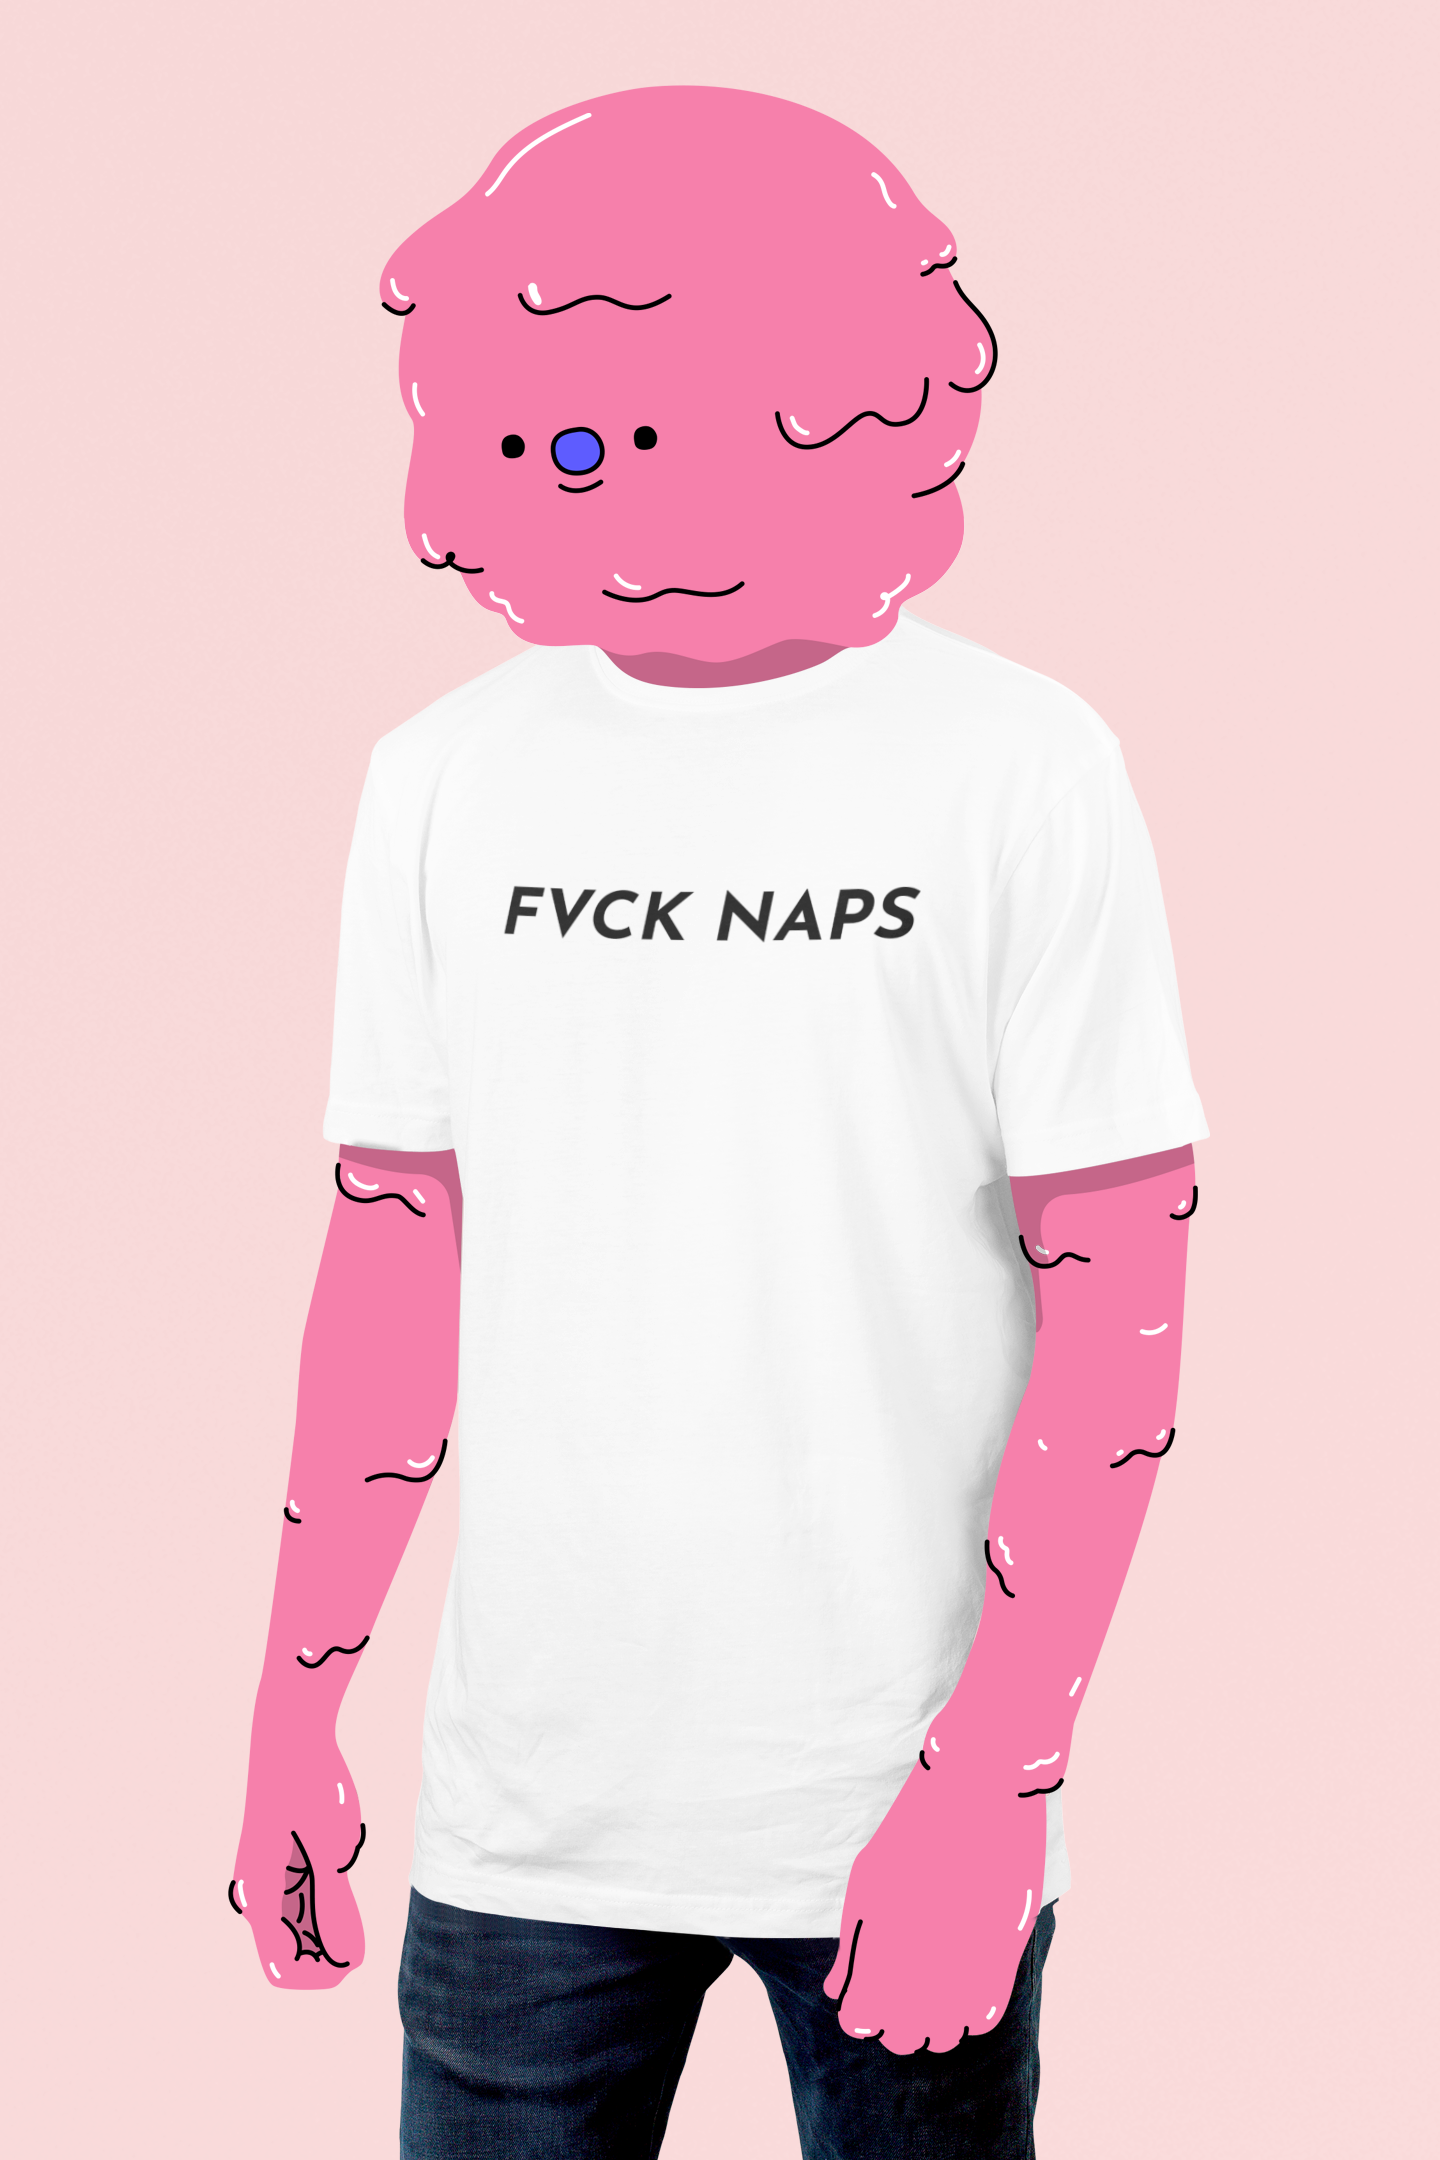 Fvck naps